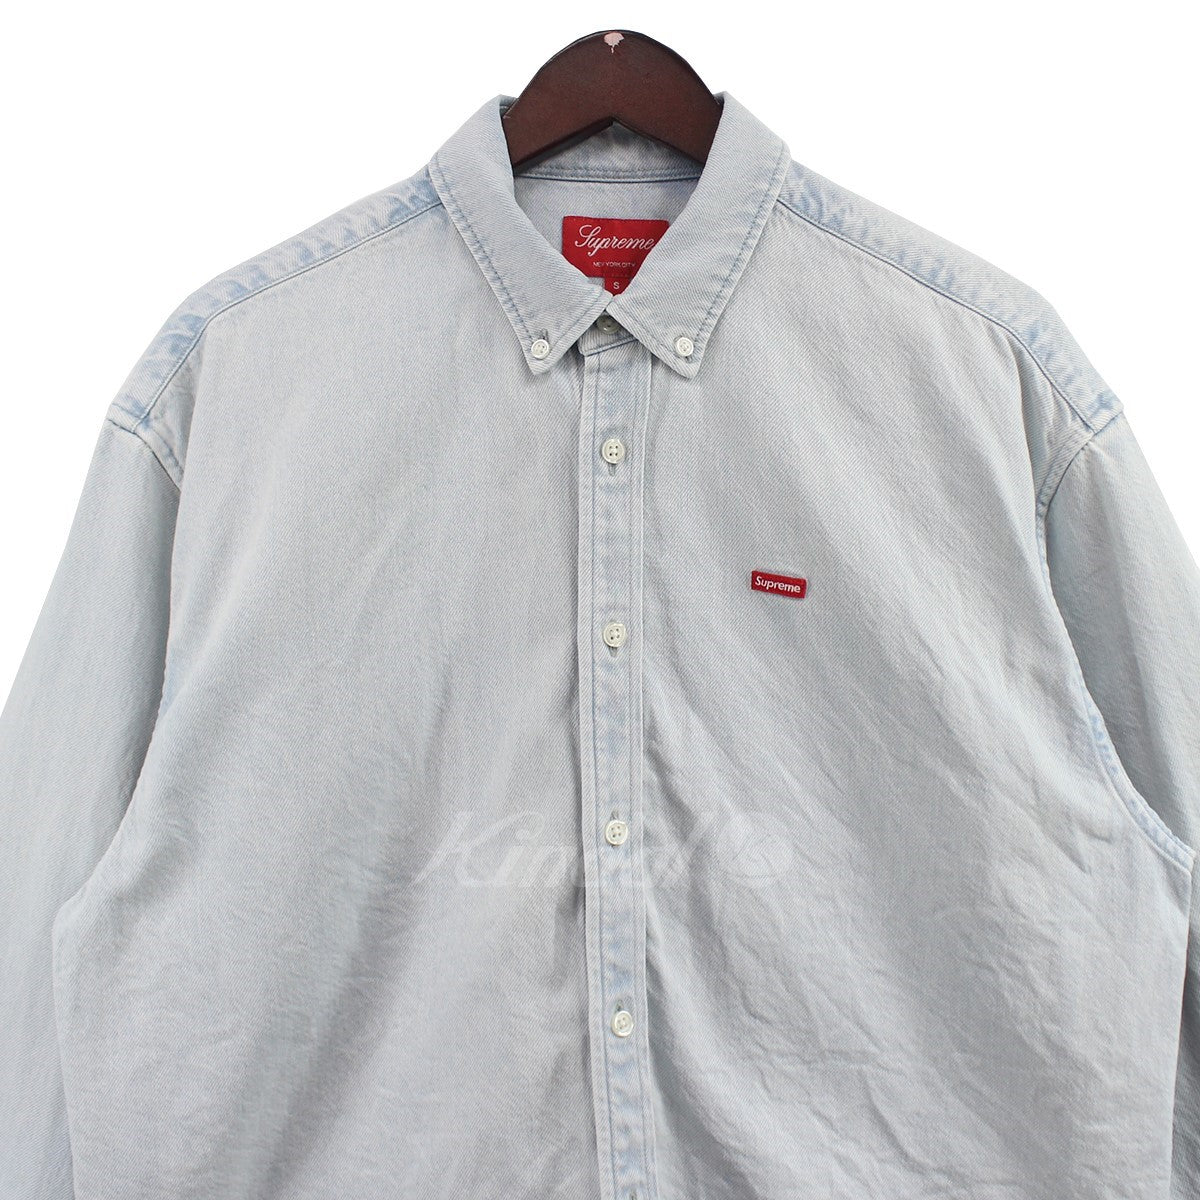 SUPREME(シュプリーム) 23SS Small Box Shirt Denim スモールボックスロゴ デニムシャツ